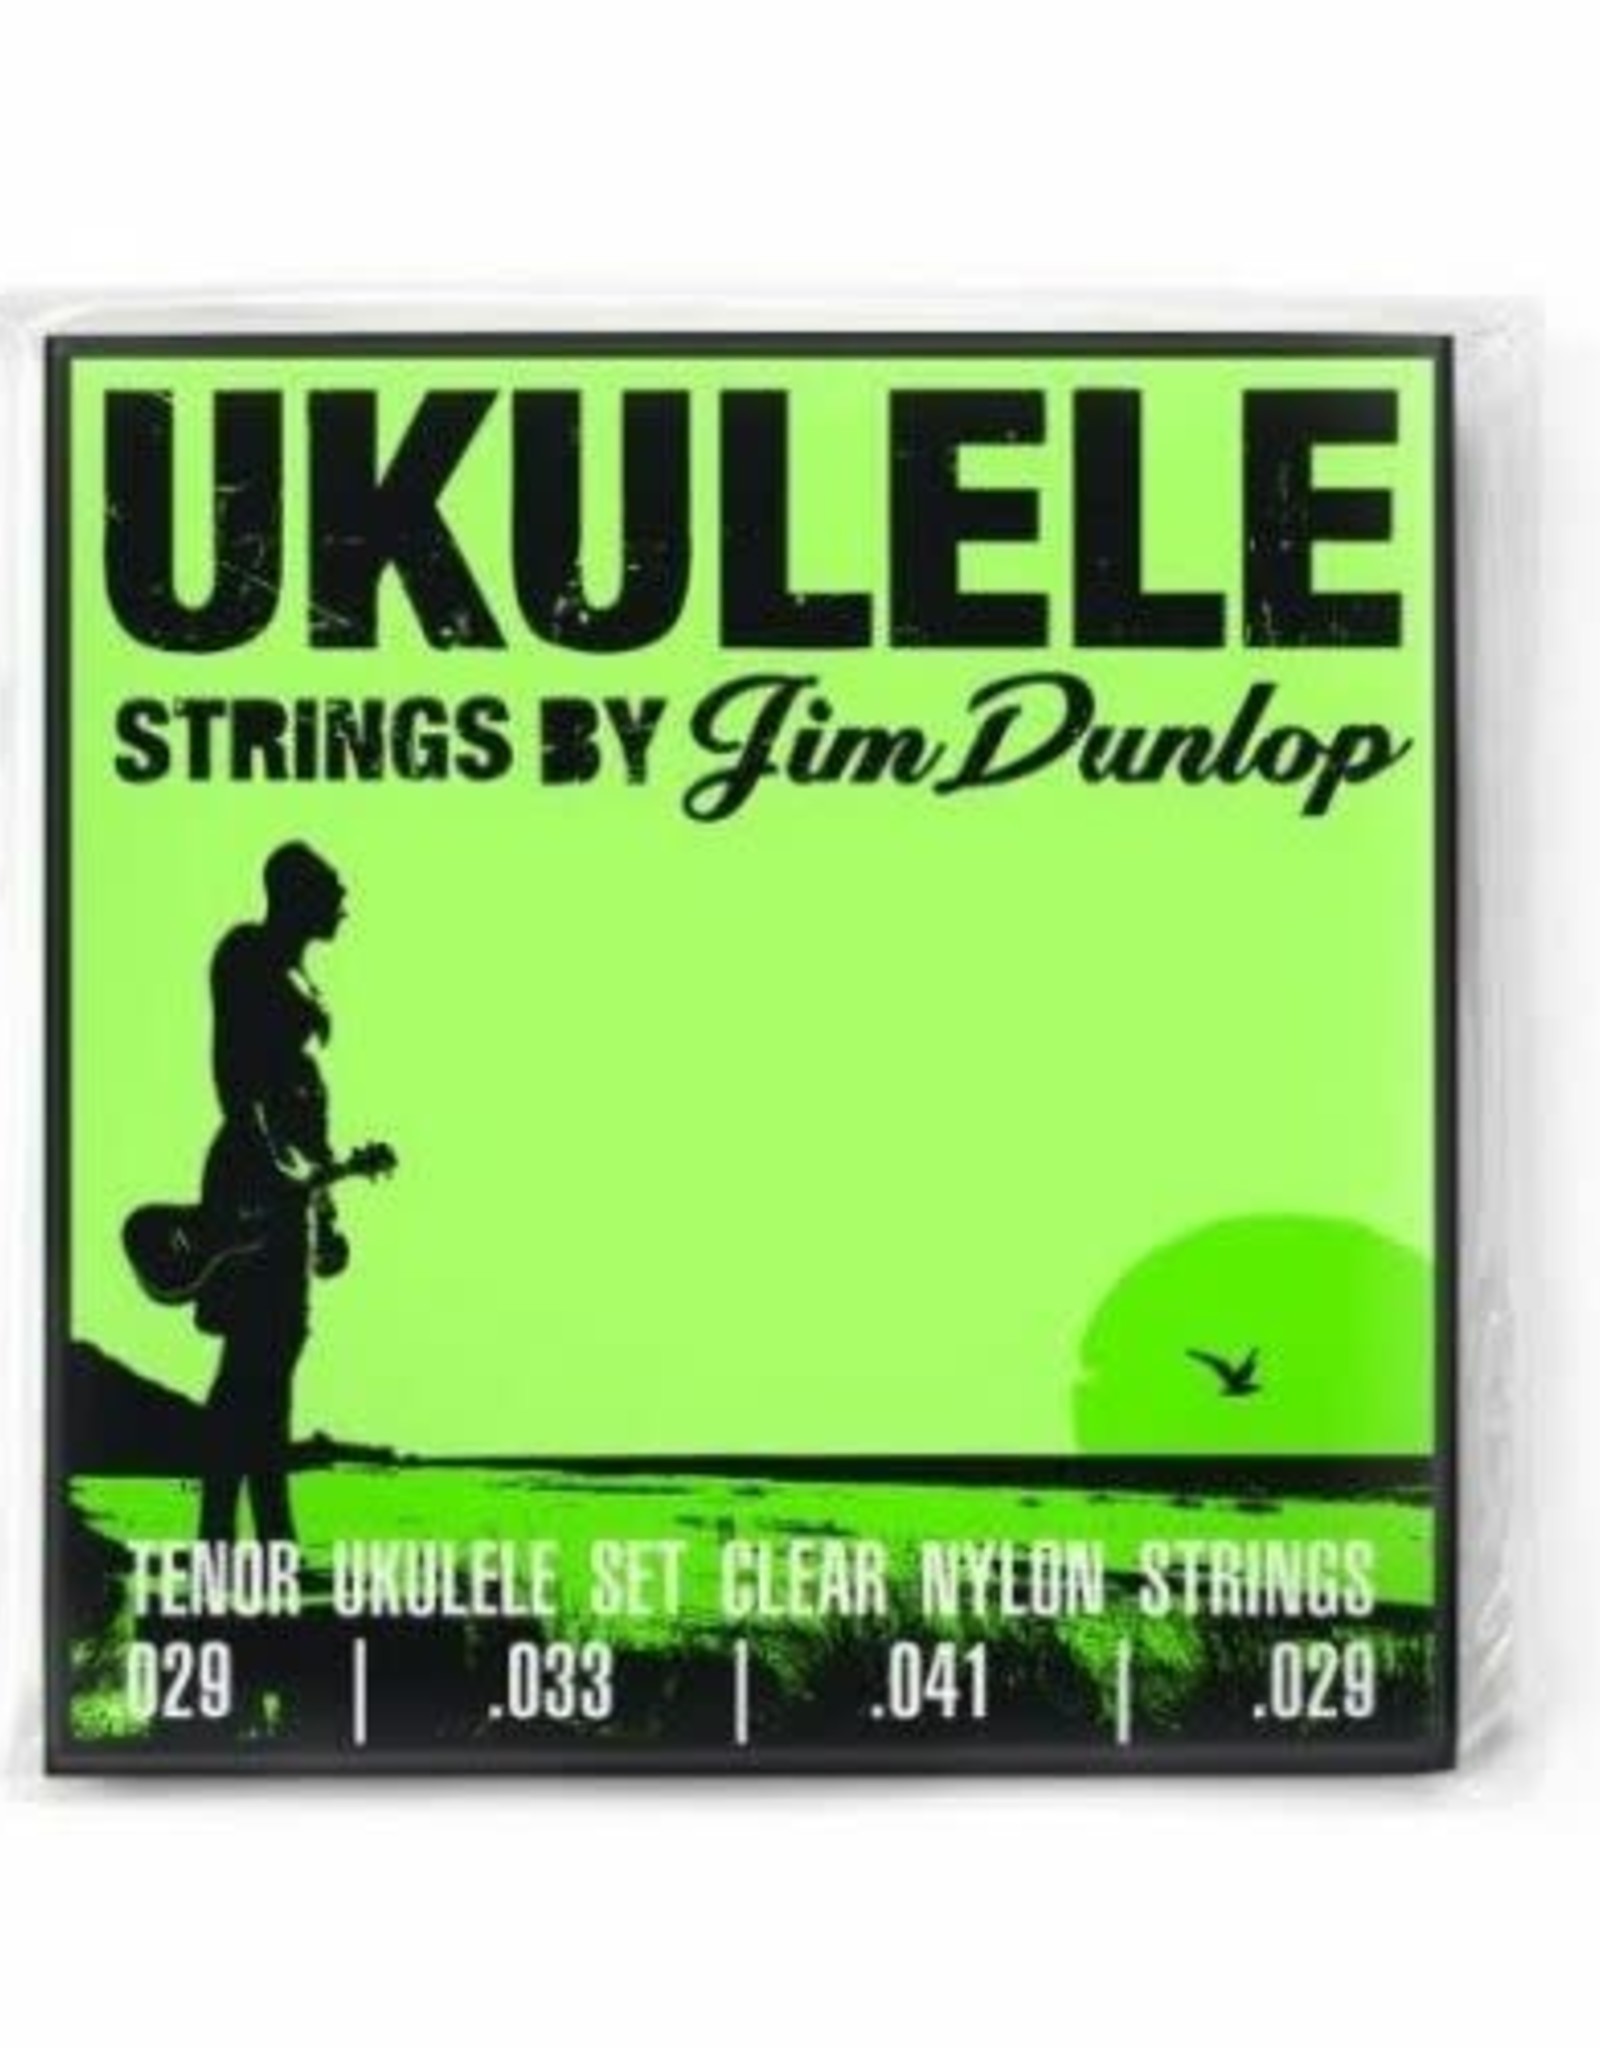 Jim Dunlop Ukulele Strings by Jim Dunlop DUY303